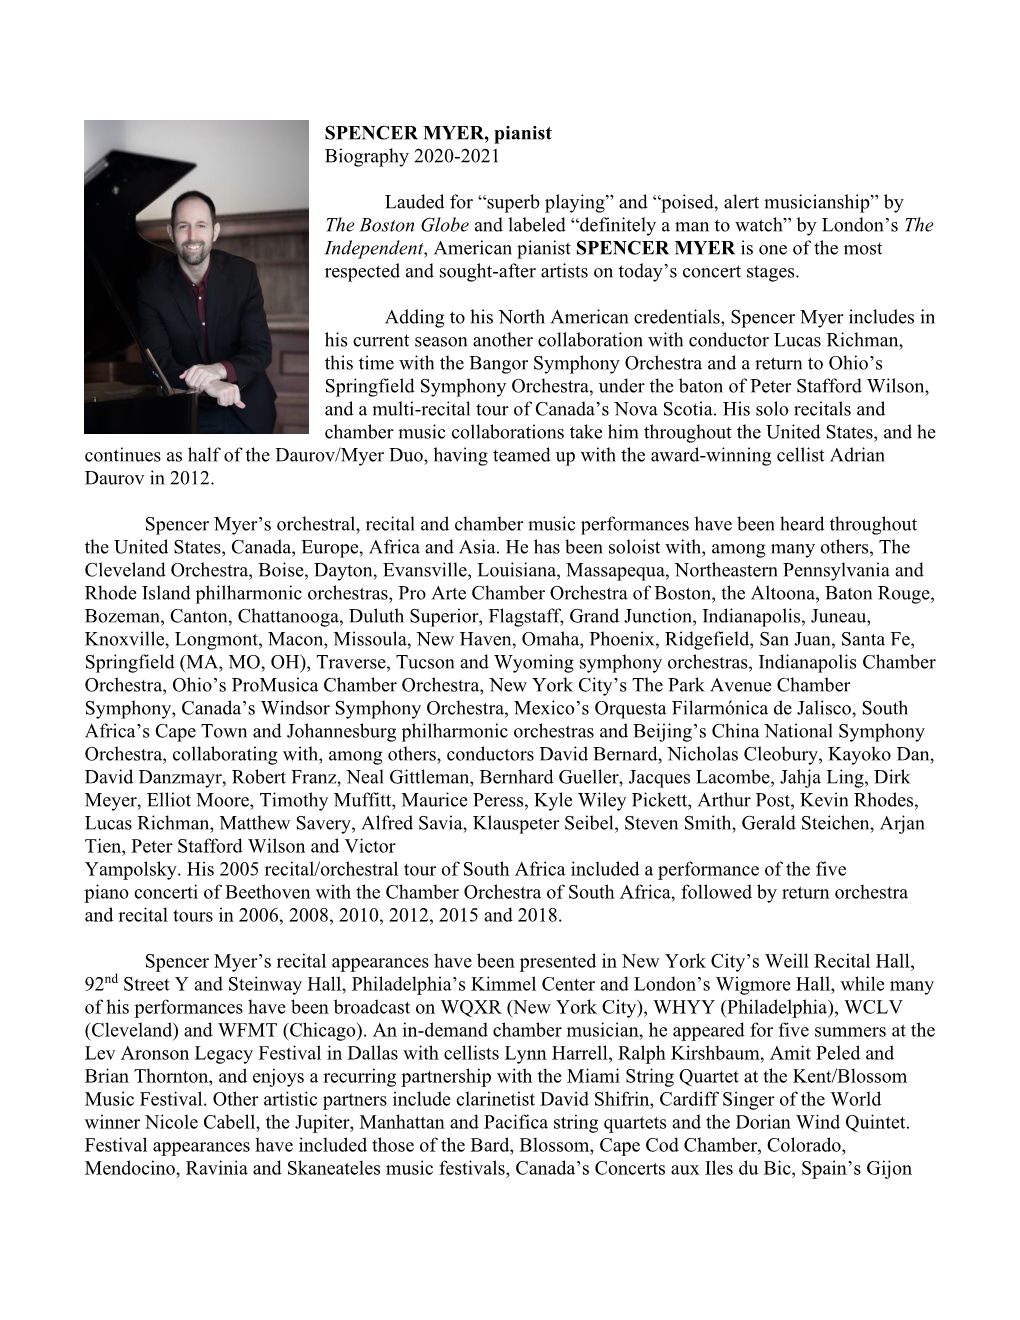 SPENCER MYER, Pianist Biography 2020-2021